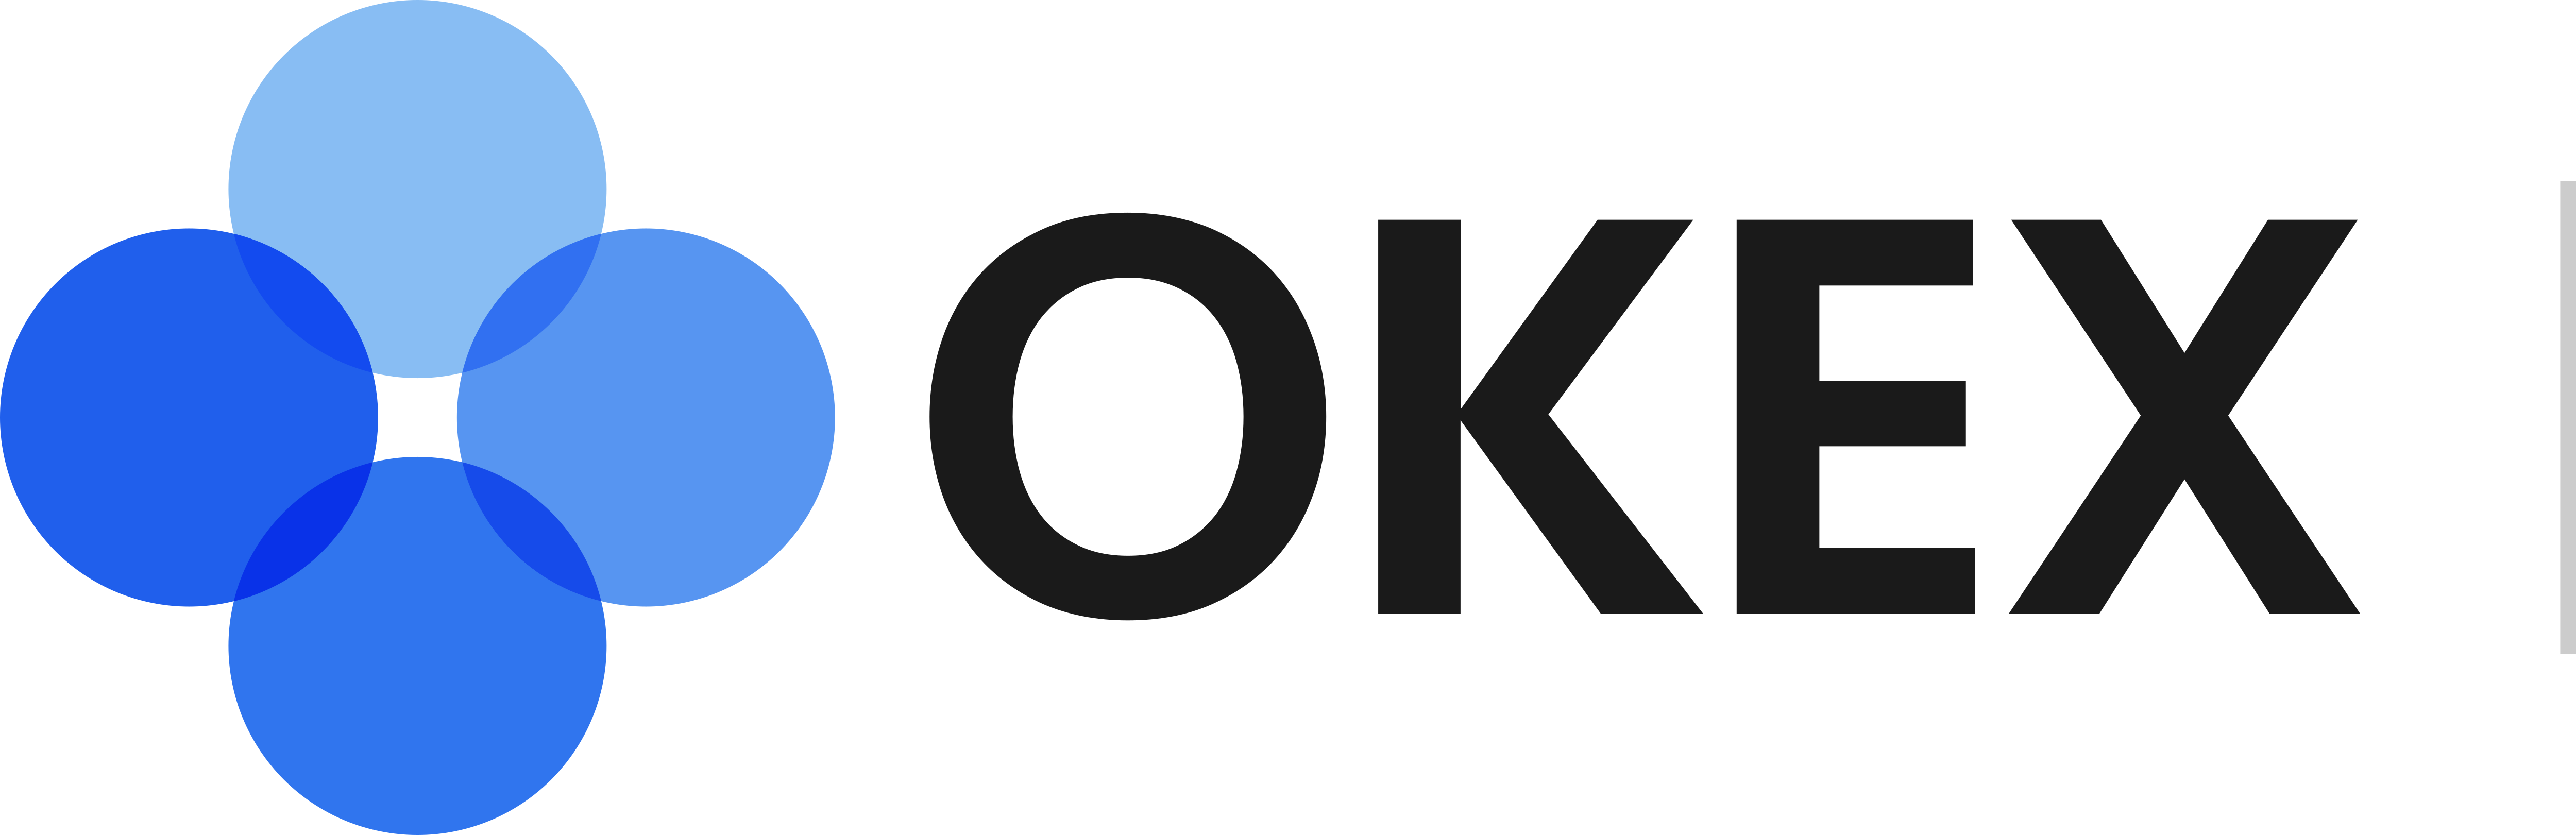 OKEx_Logo